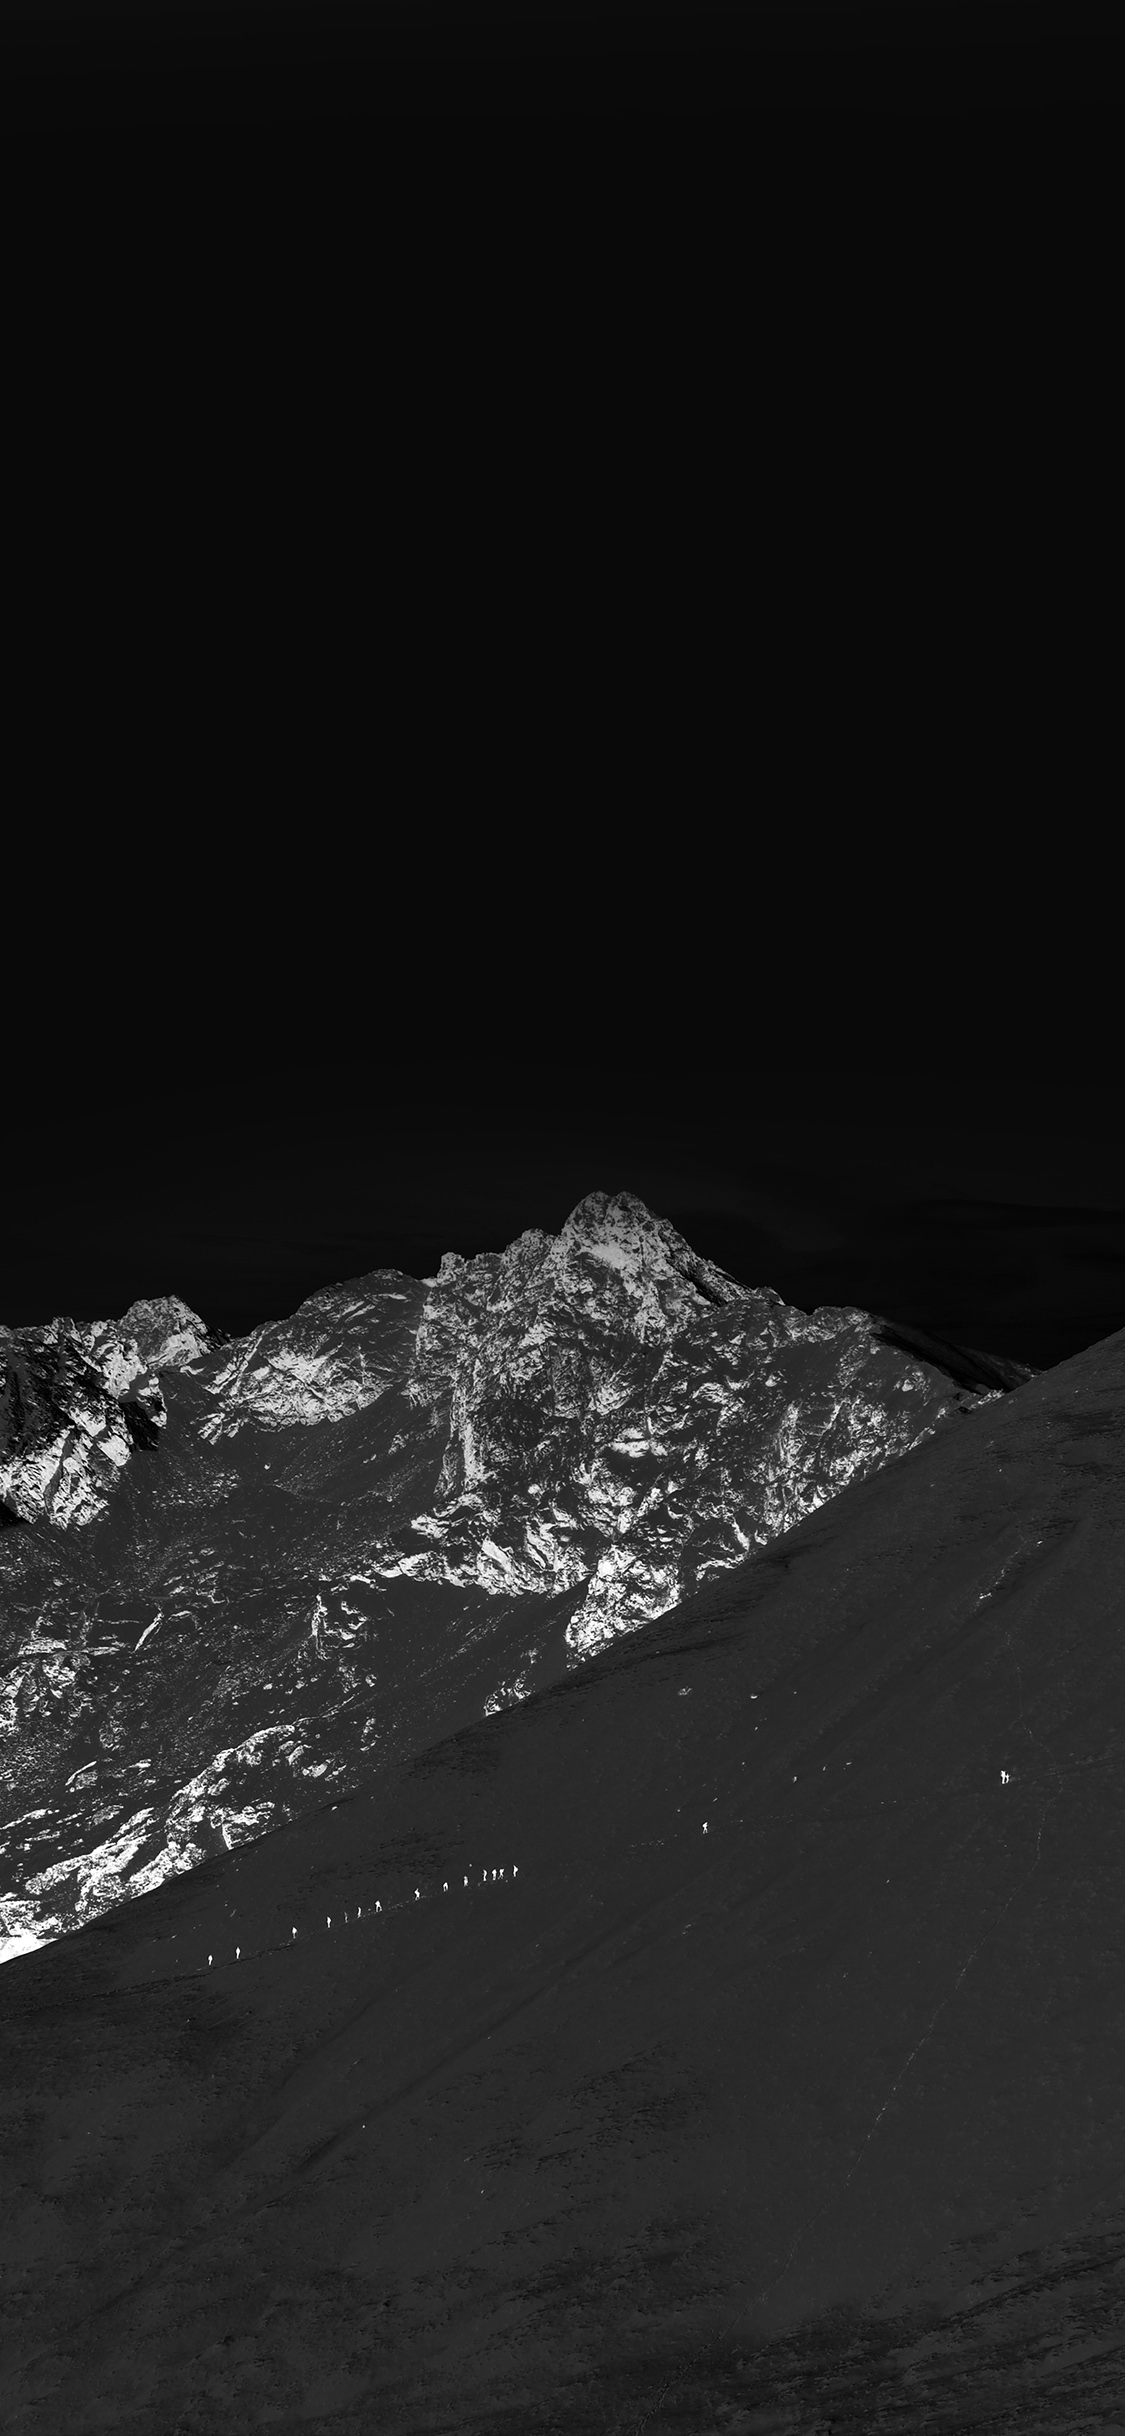 iPhone X wallpaper. winter mountain snow bw nature dark